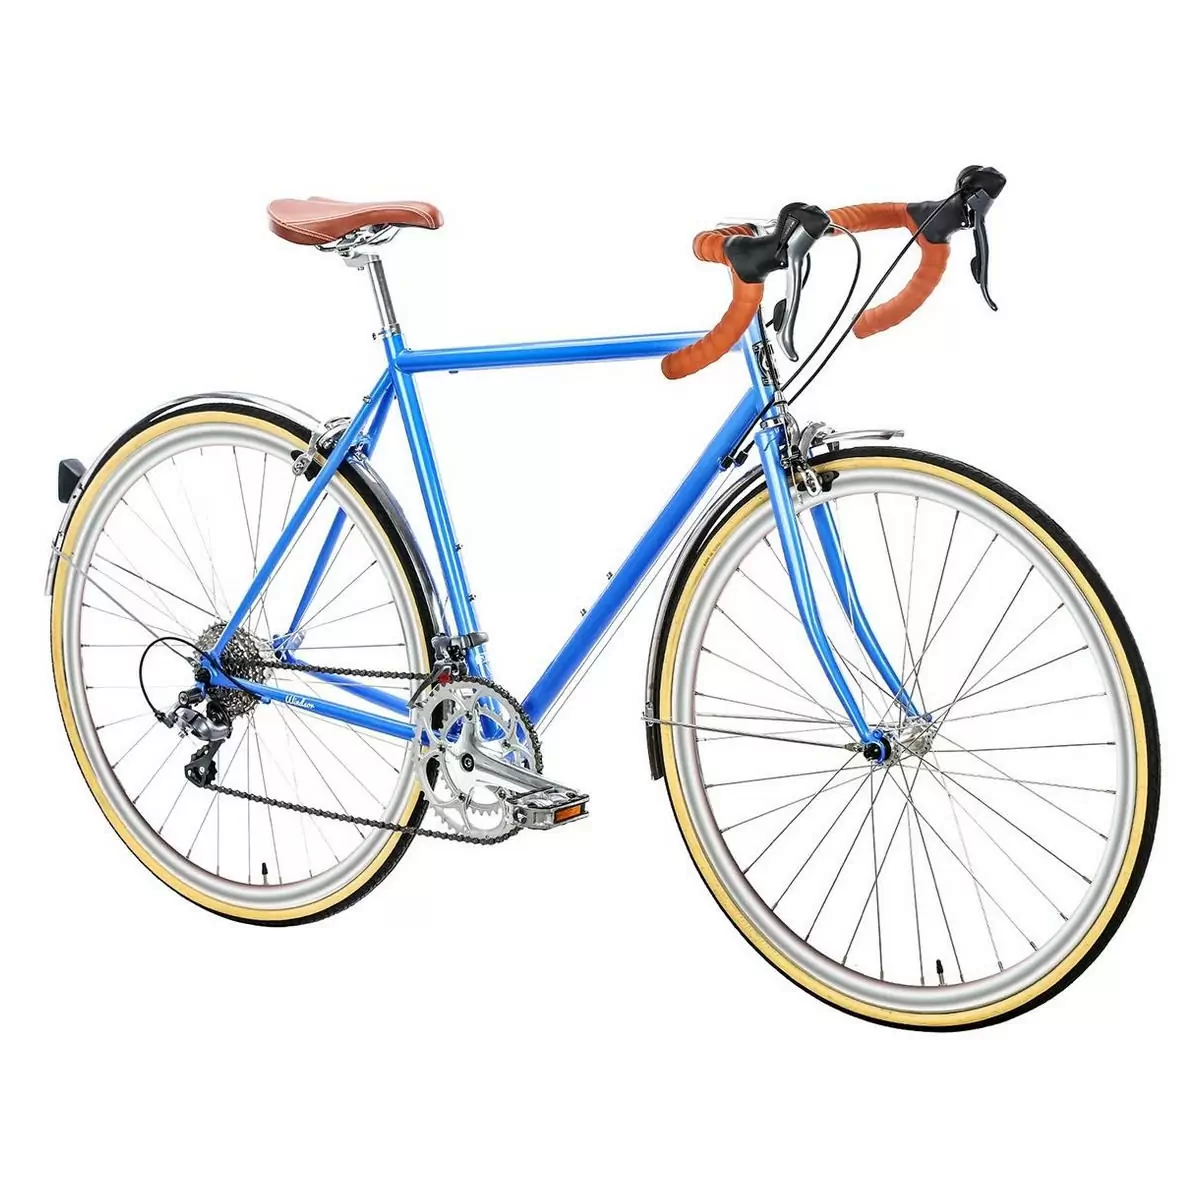 Bicicleta urbana TROY 16spd azul windsor médio 54cm #1